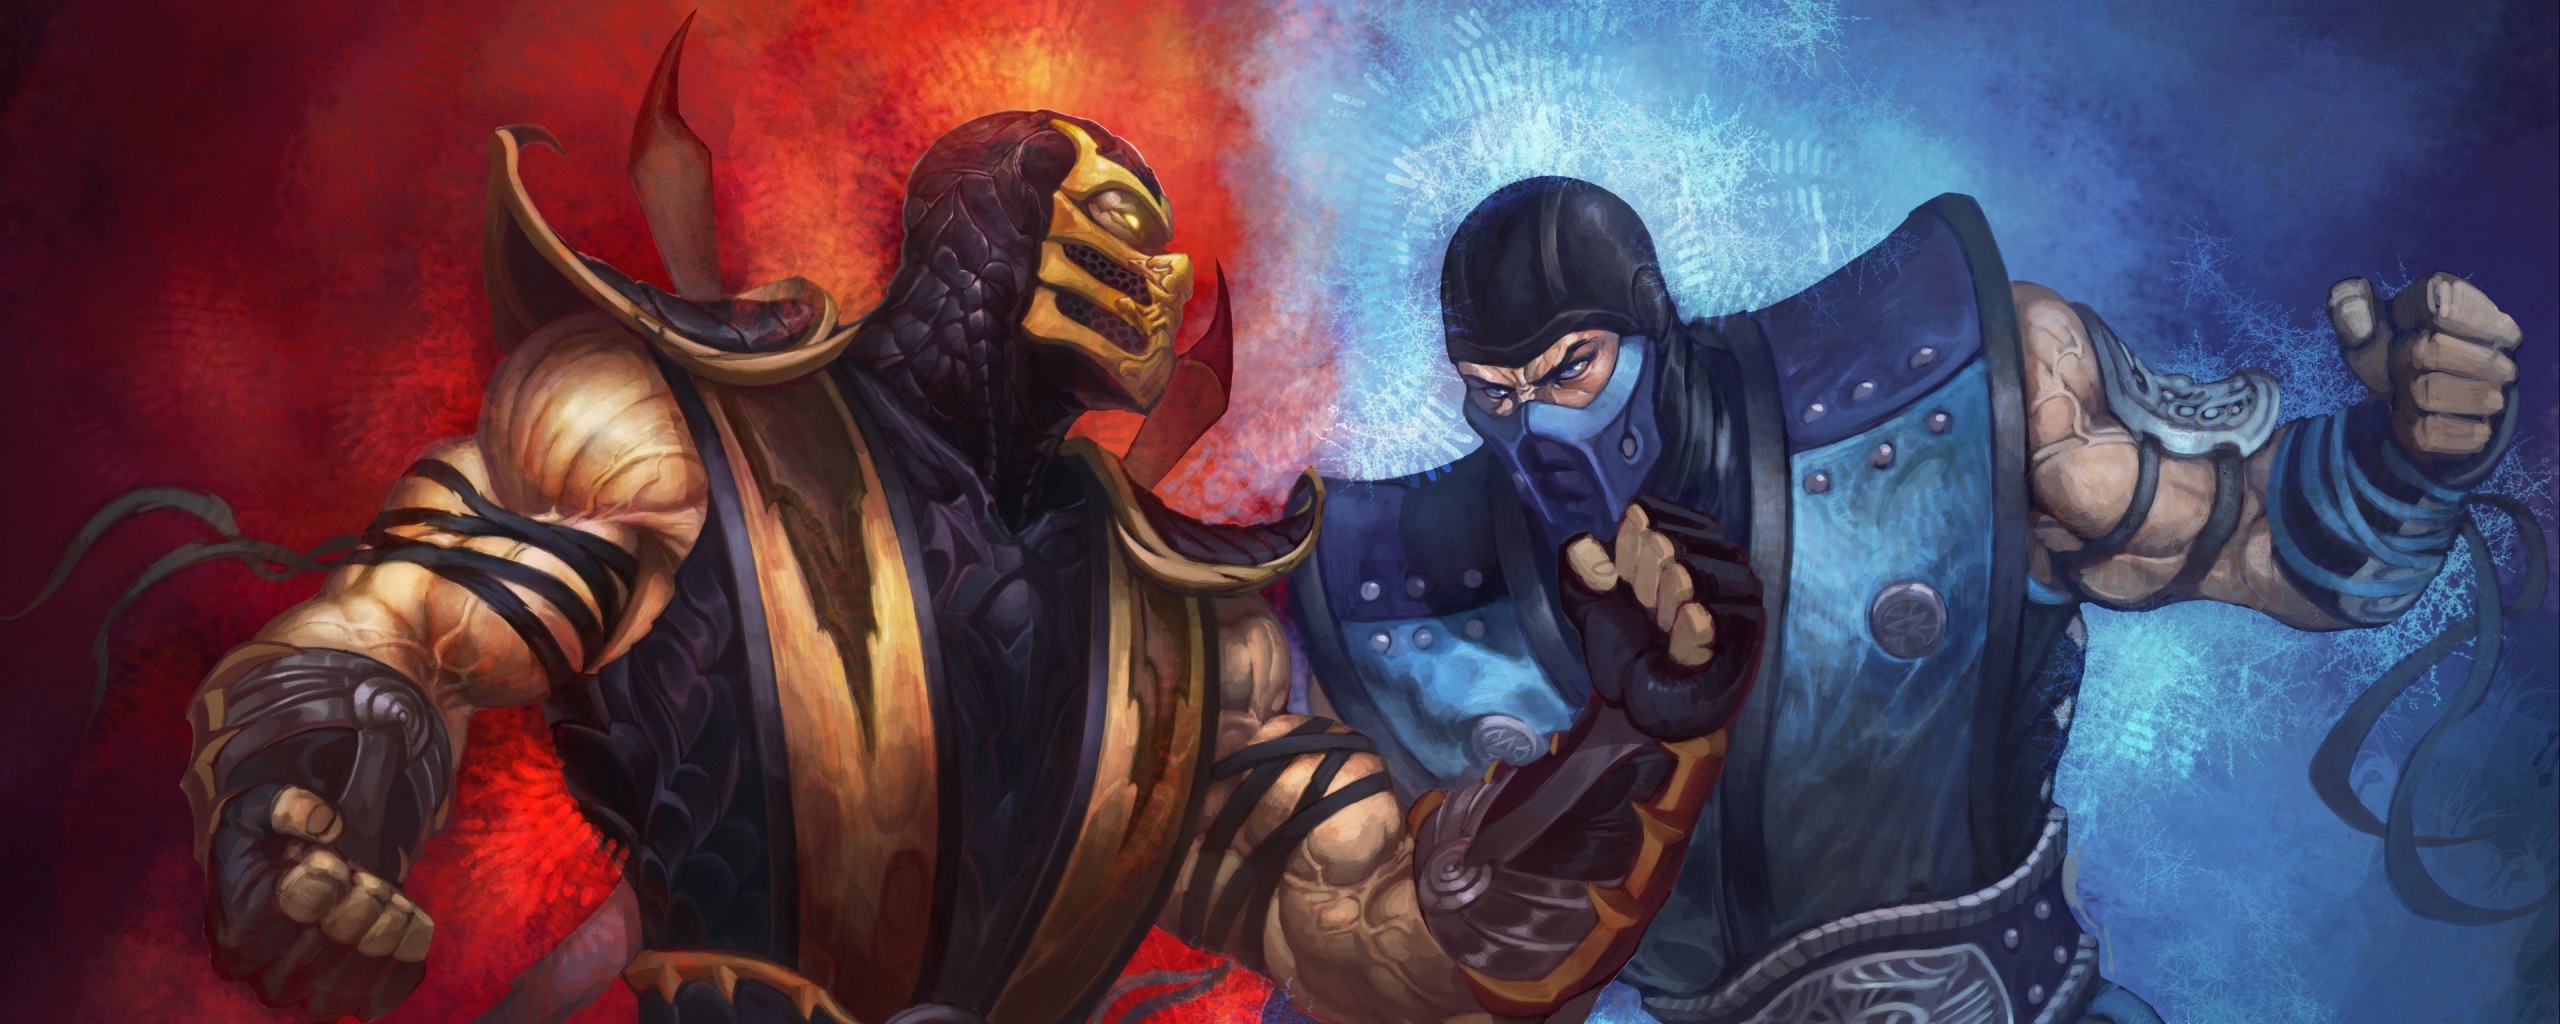 Wallpaper 4k Mortal Kombat Scorpion Sub Zero Punch Ice Fire